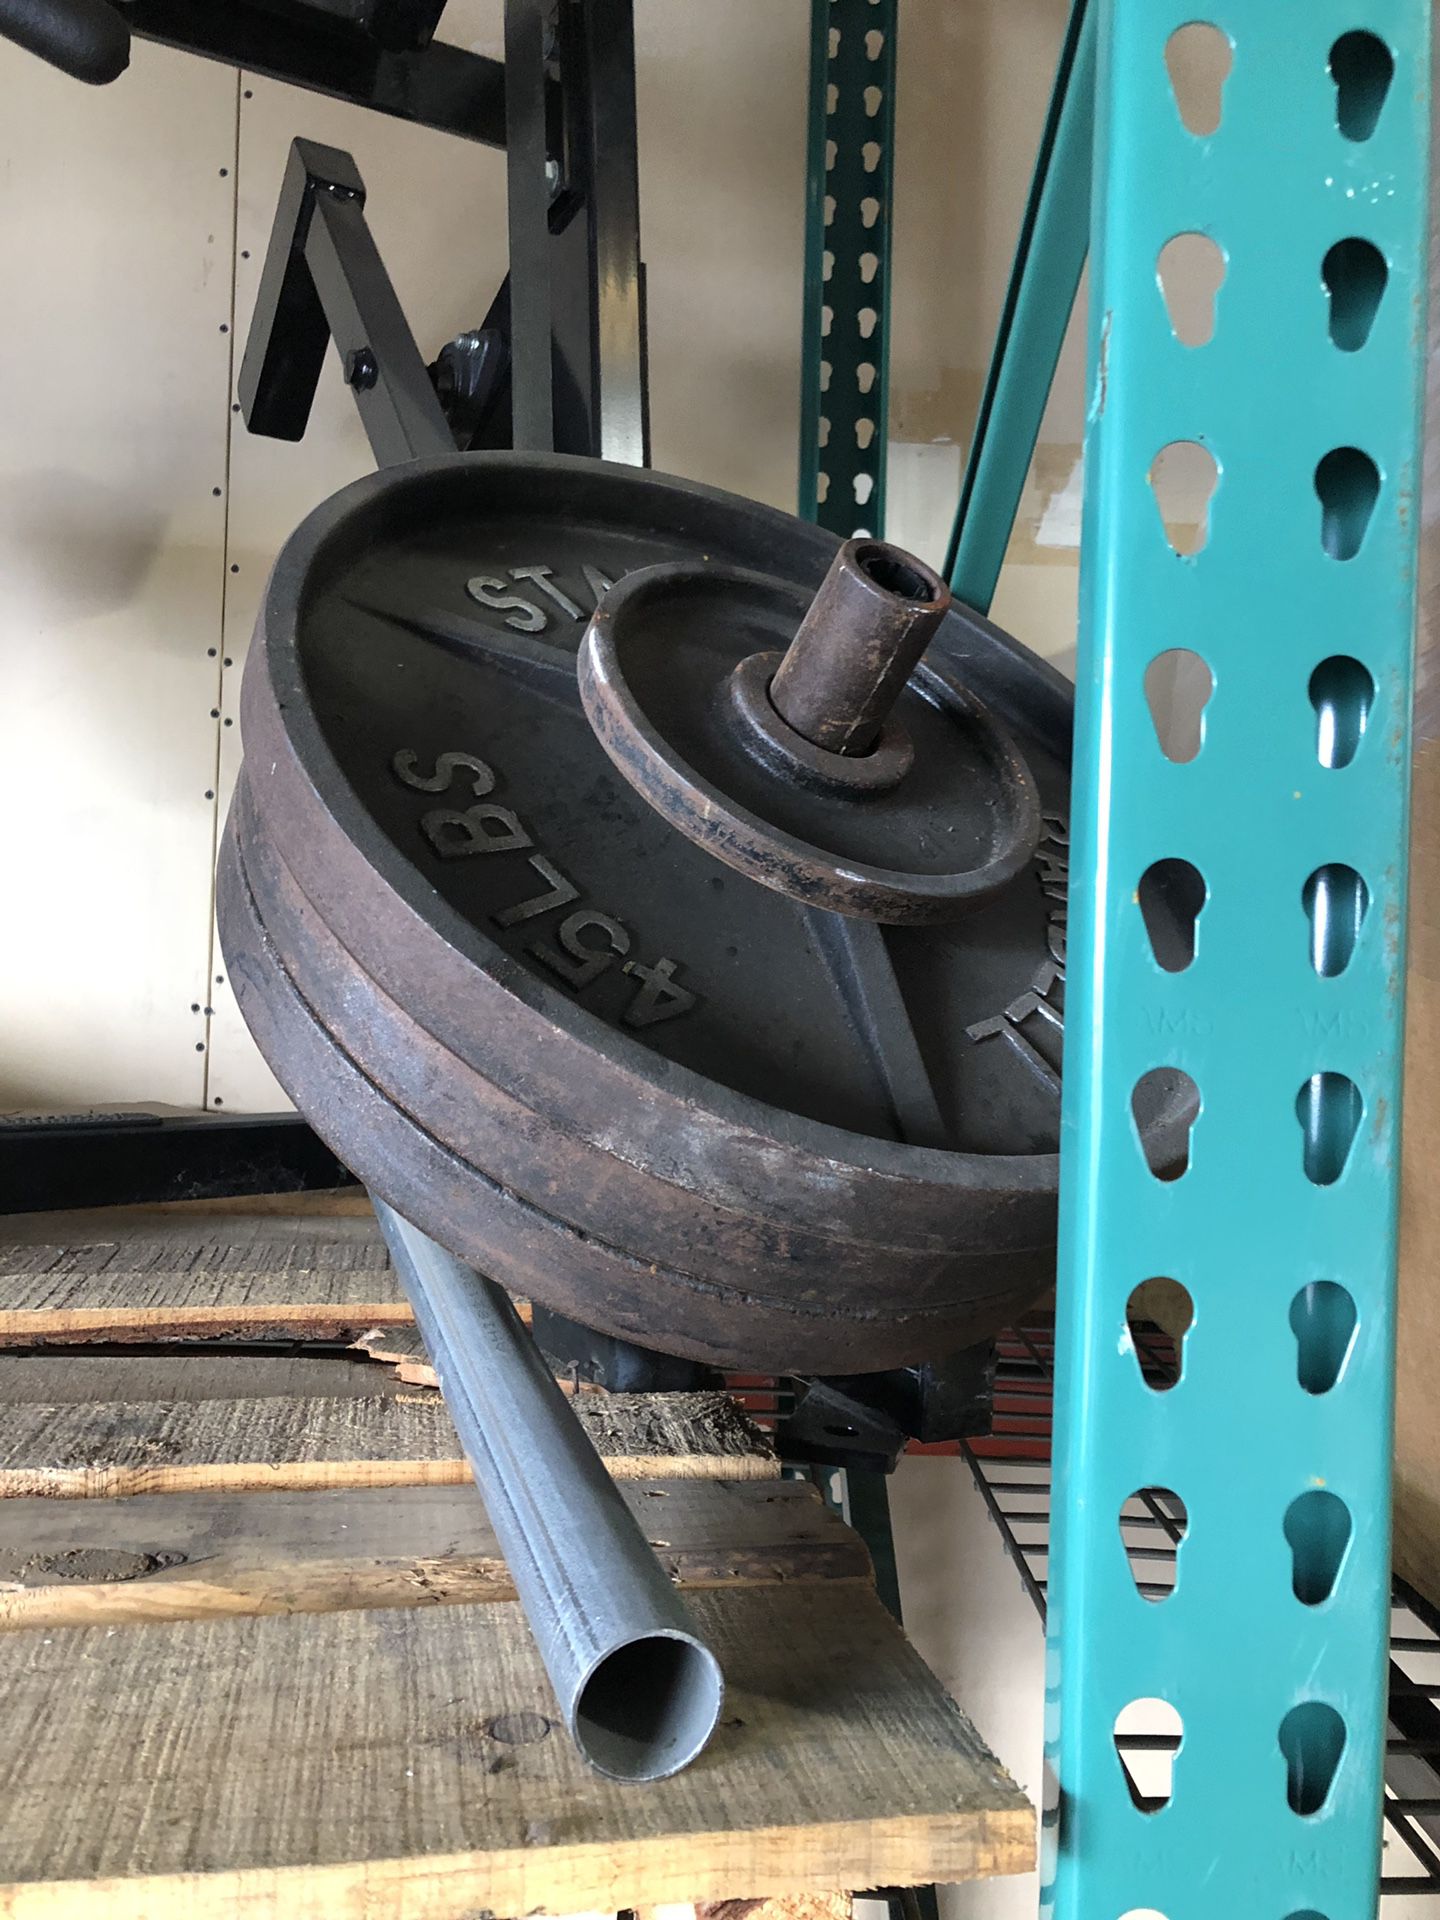 45 lb weight - 45 pound Weight plate - Gym Weights